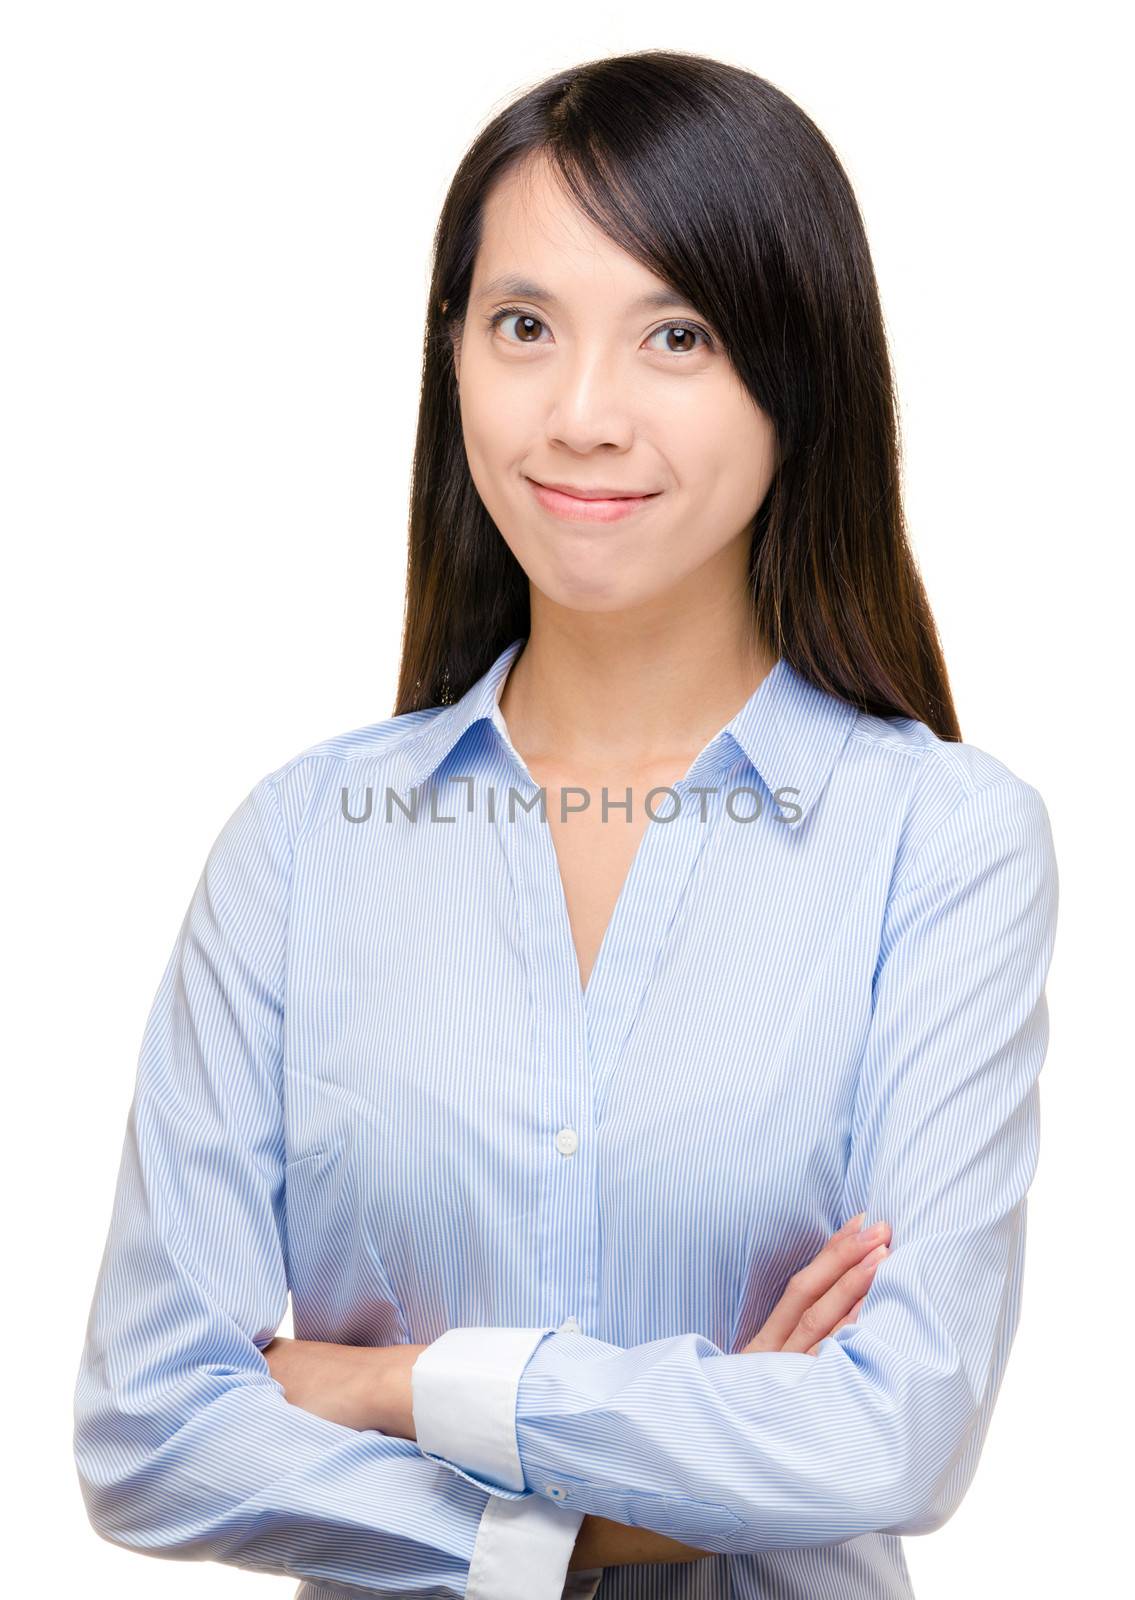 Asian business woman by leungchopan